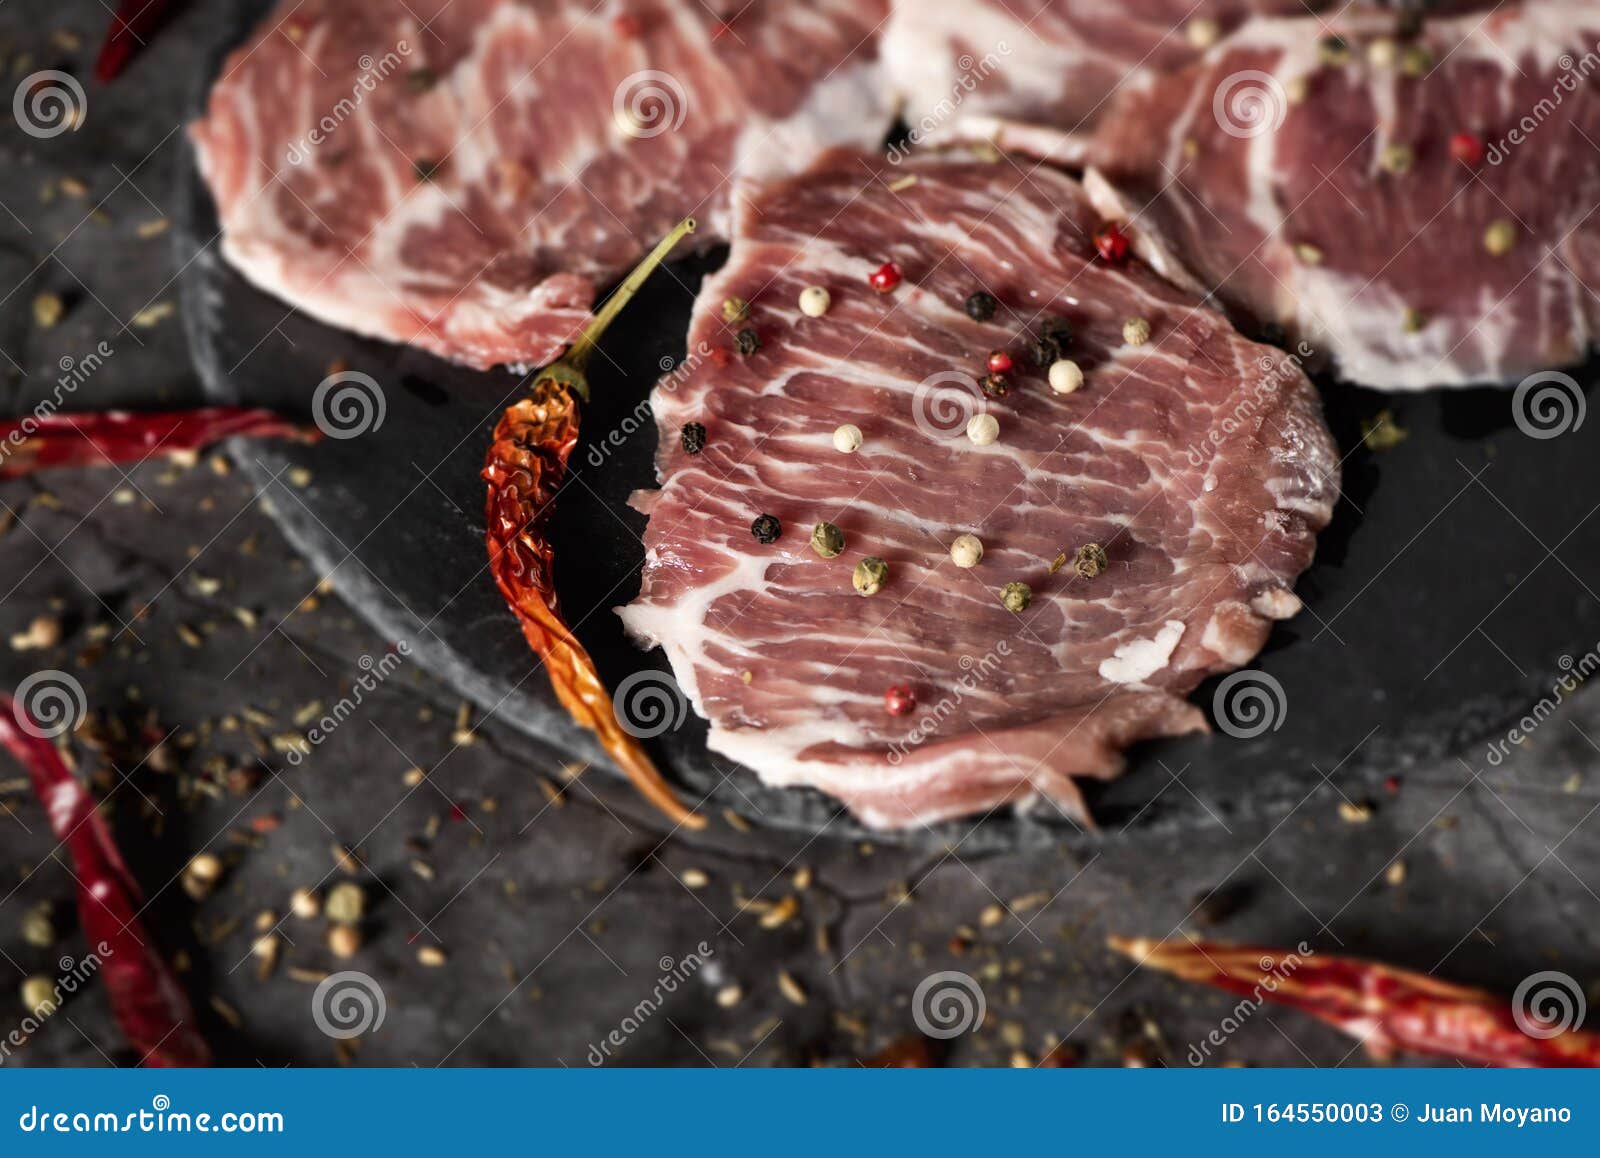 secreto iberico, pork cut from spanish iberian pig